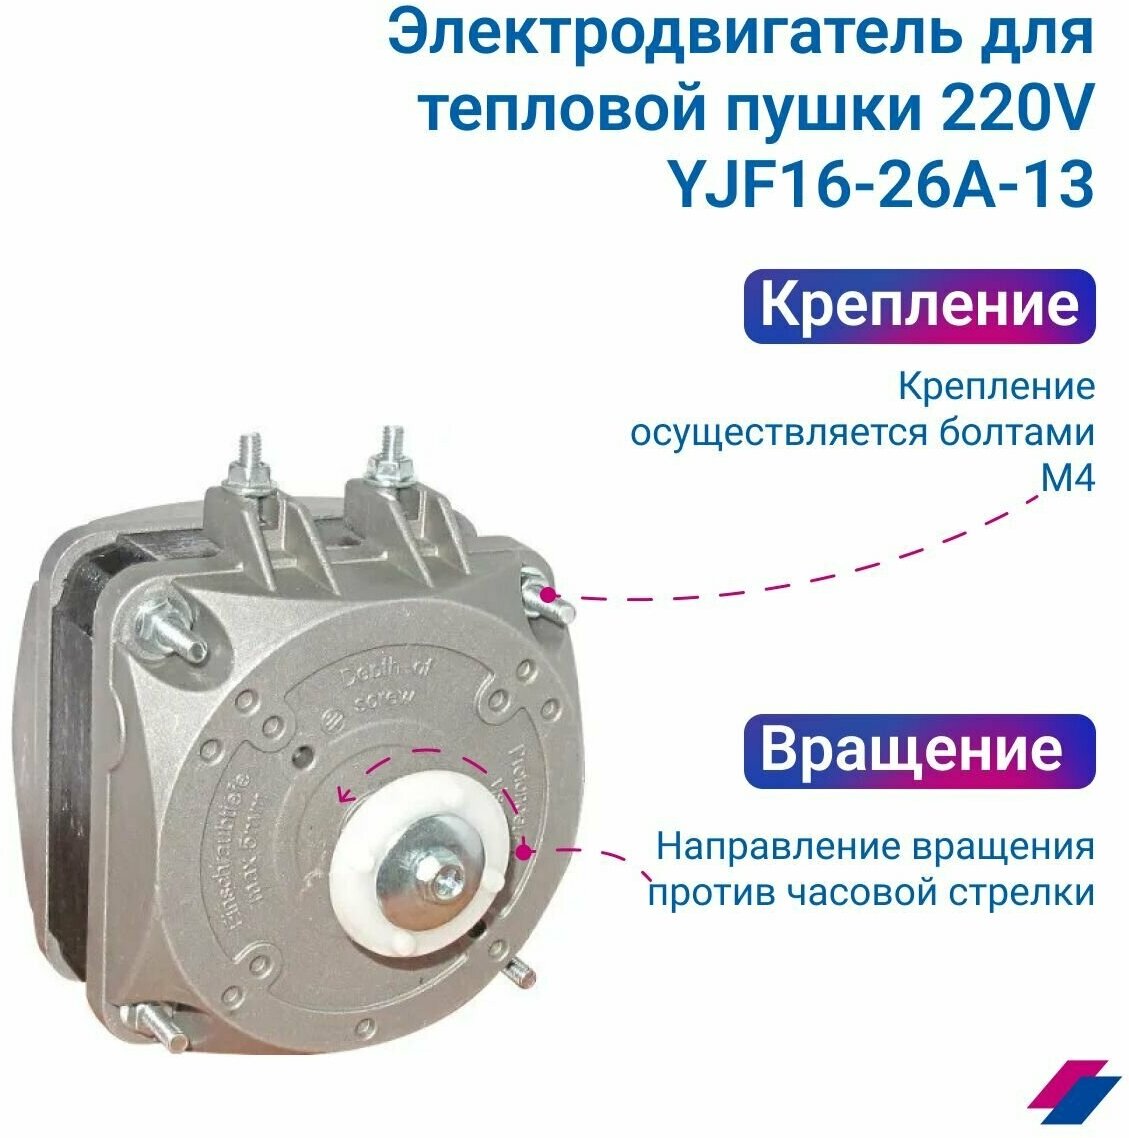 Электродвигатель для тепловой пушки 220В 16W 1300об/мин YJF16-26A-13